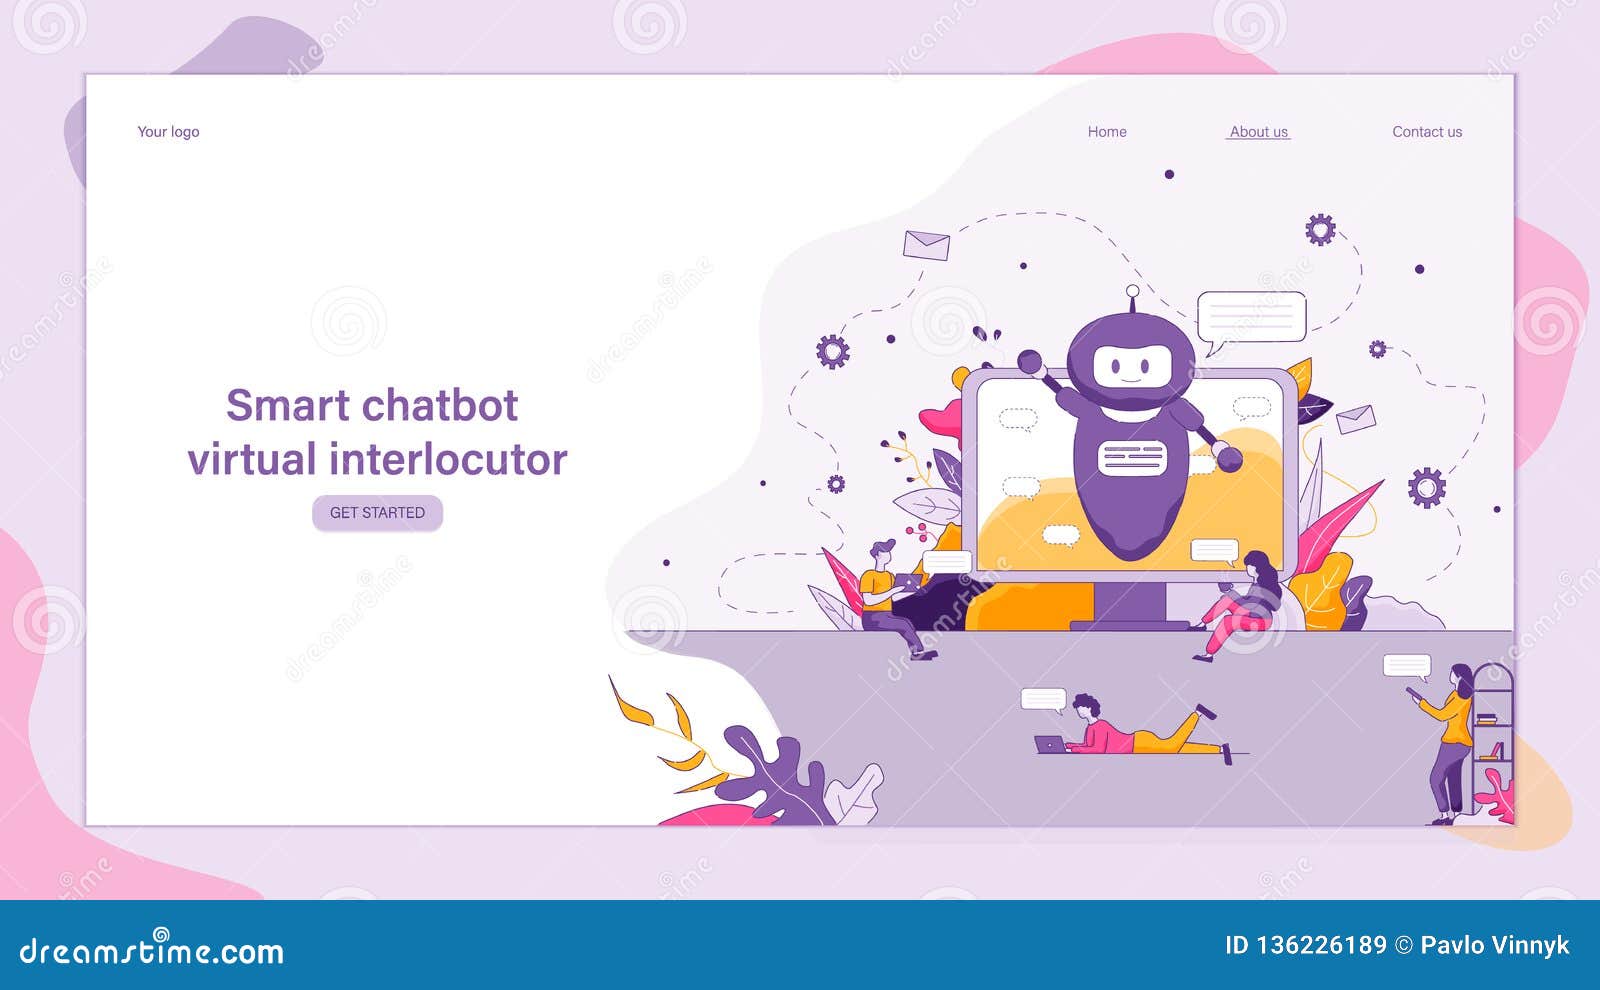  smart chatbot virtual interlocutor